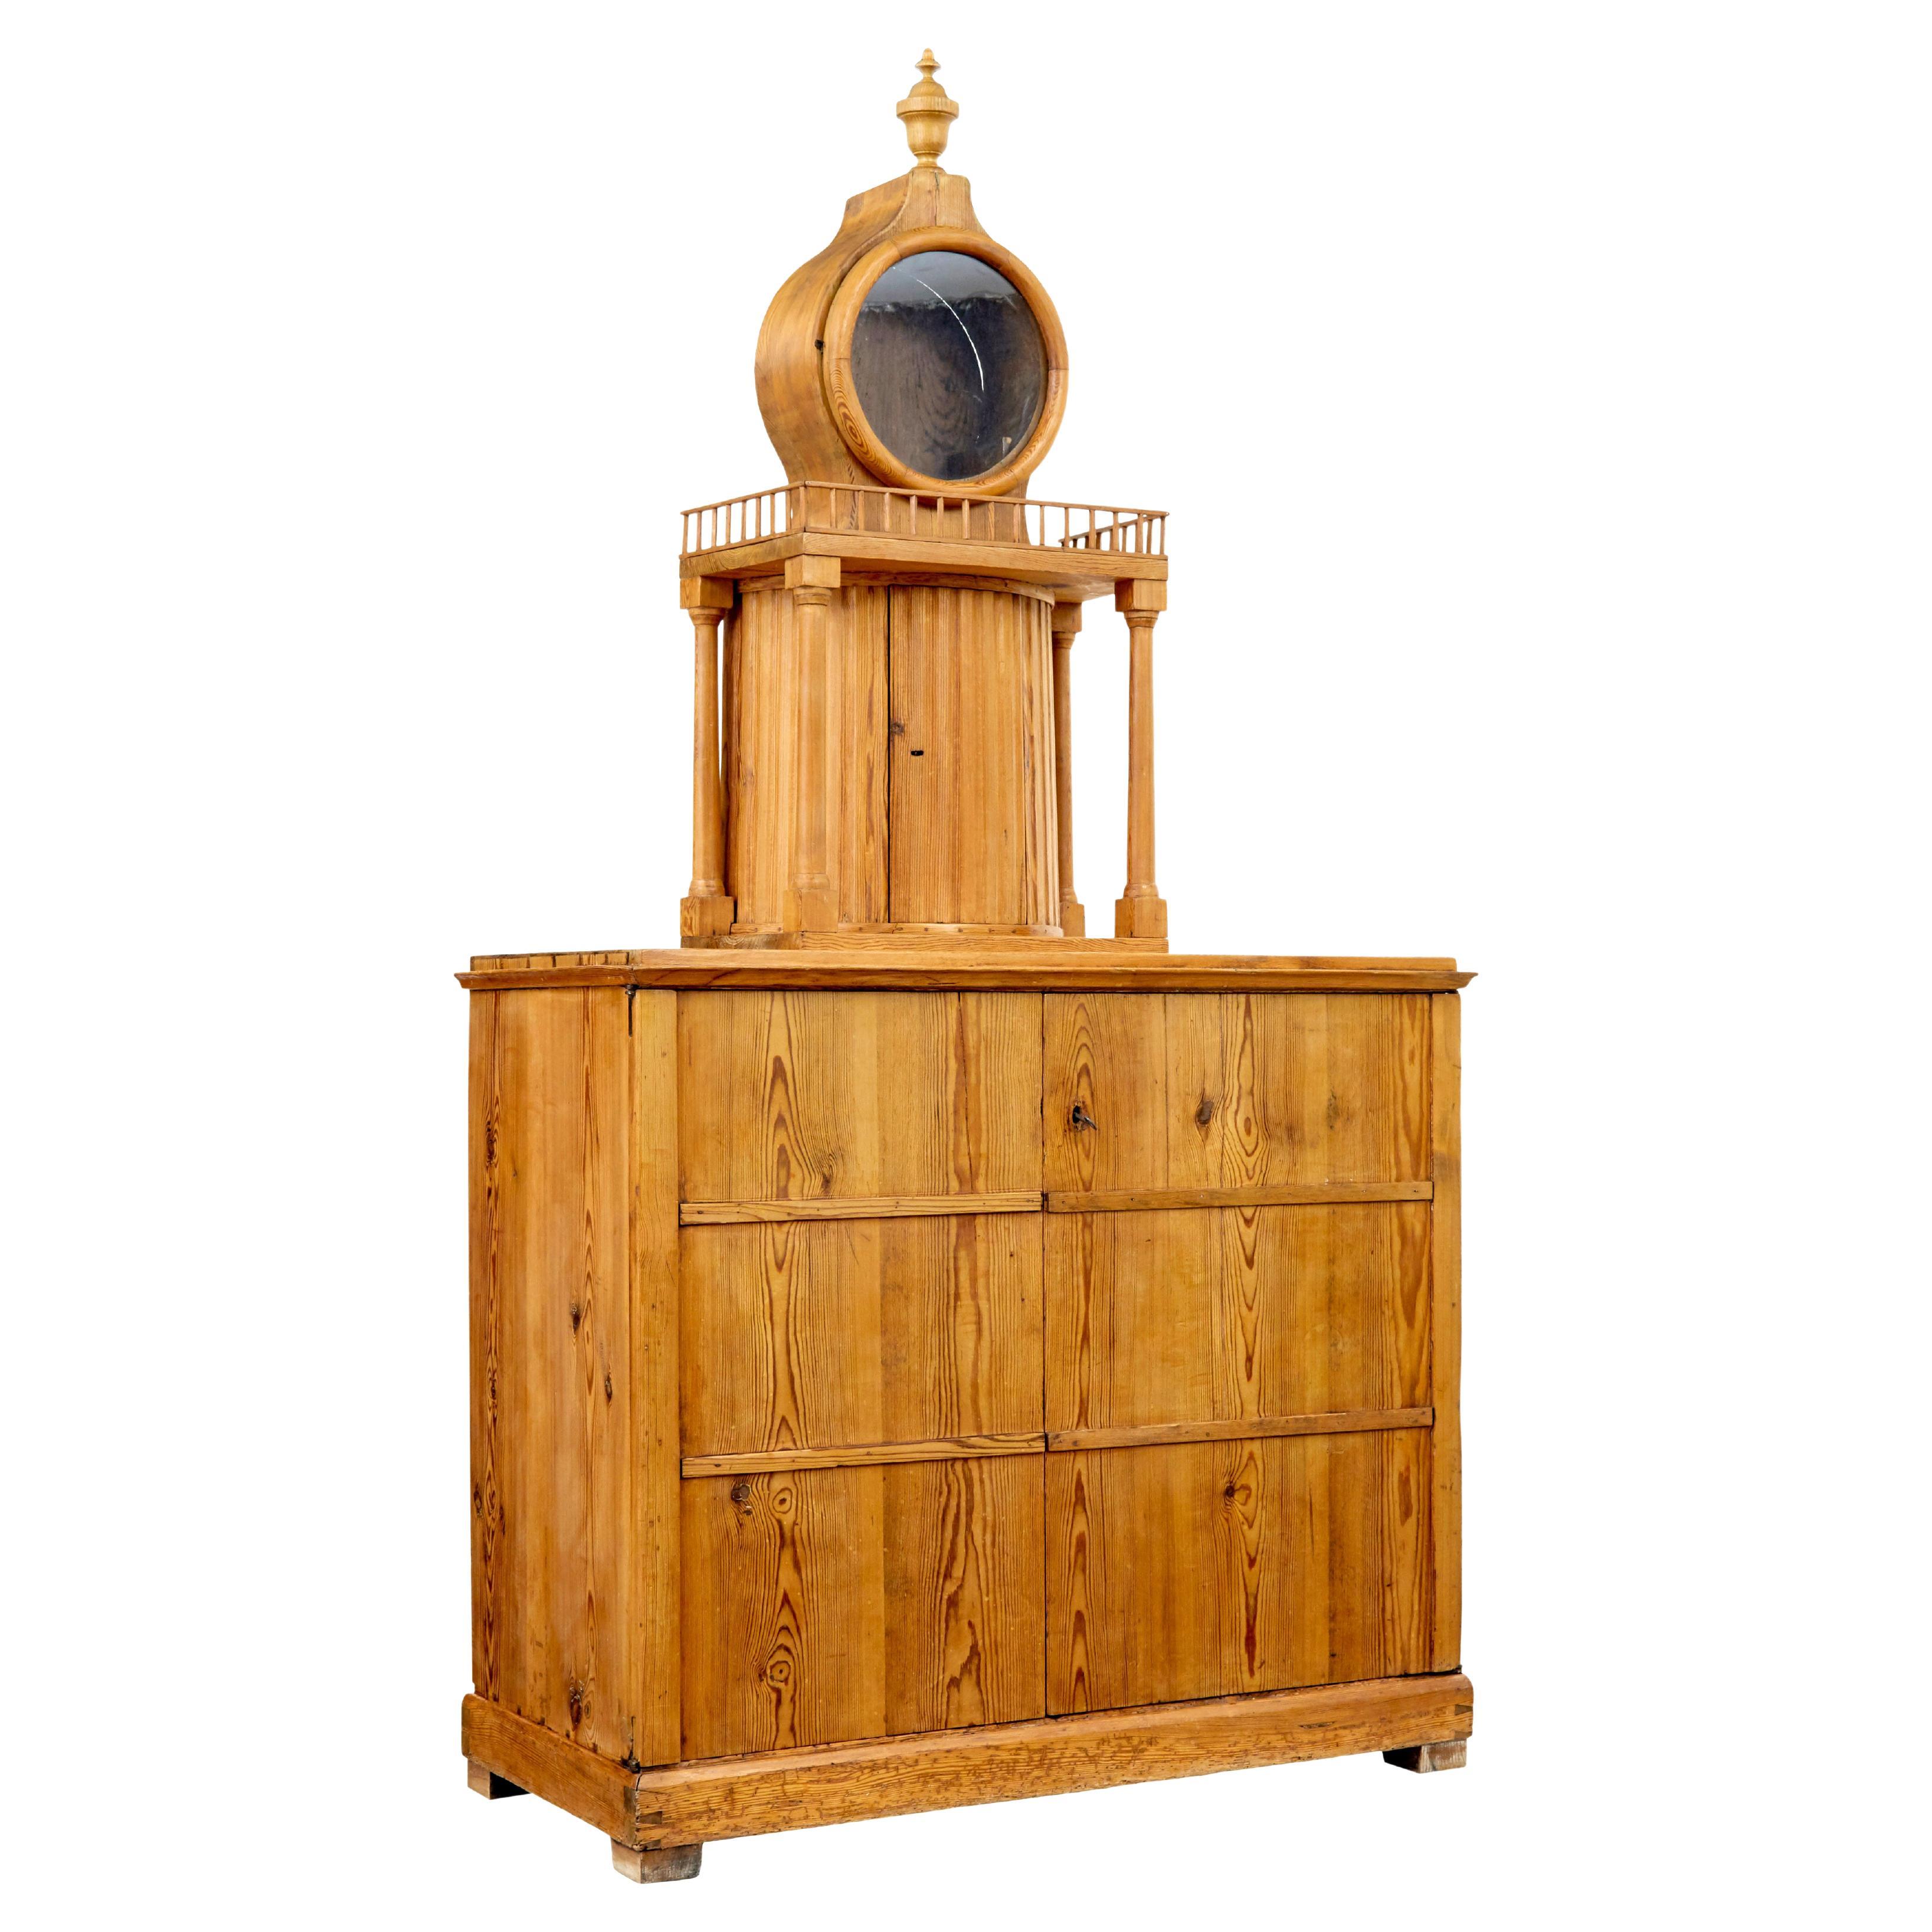 19th century Swedish pine kitchen clock cupboard